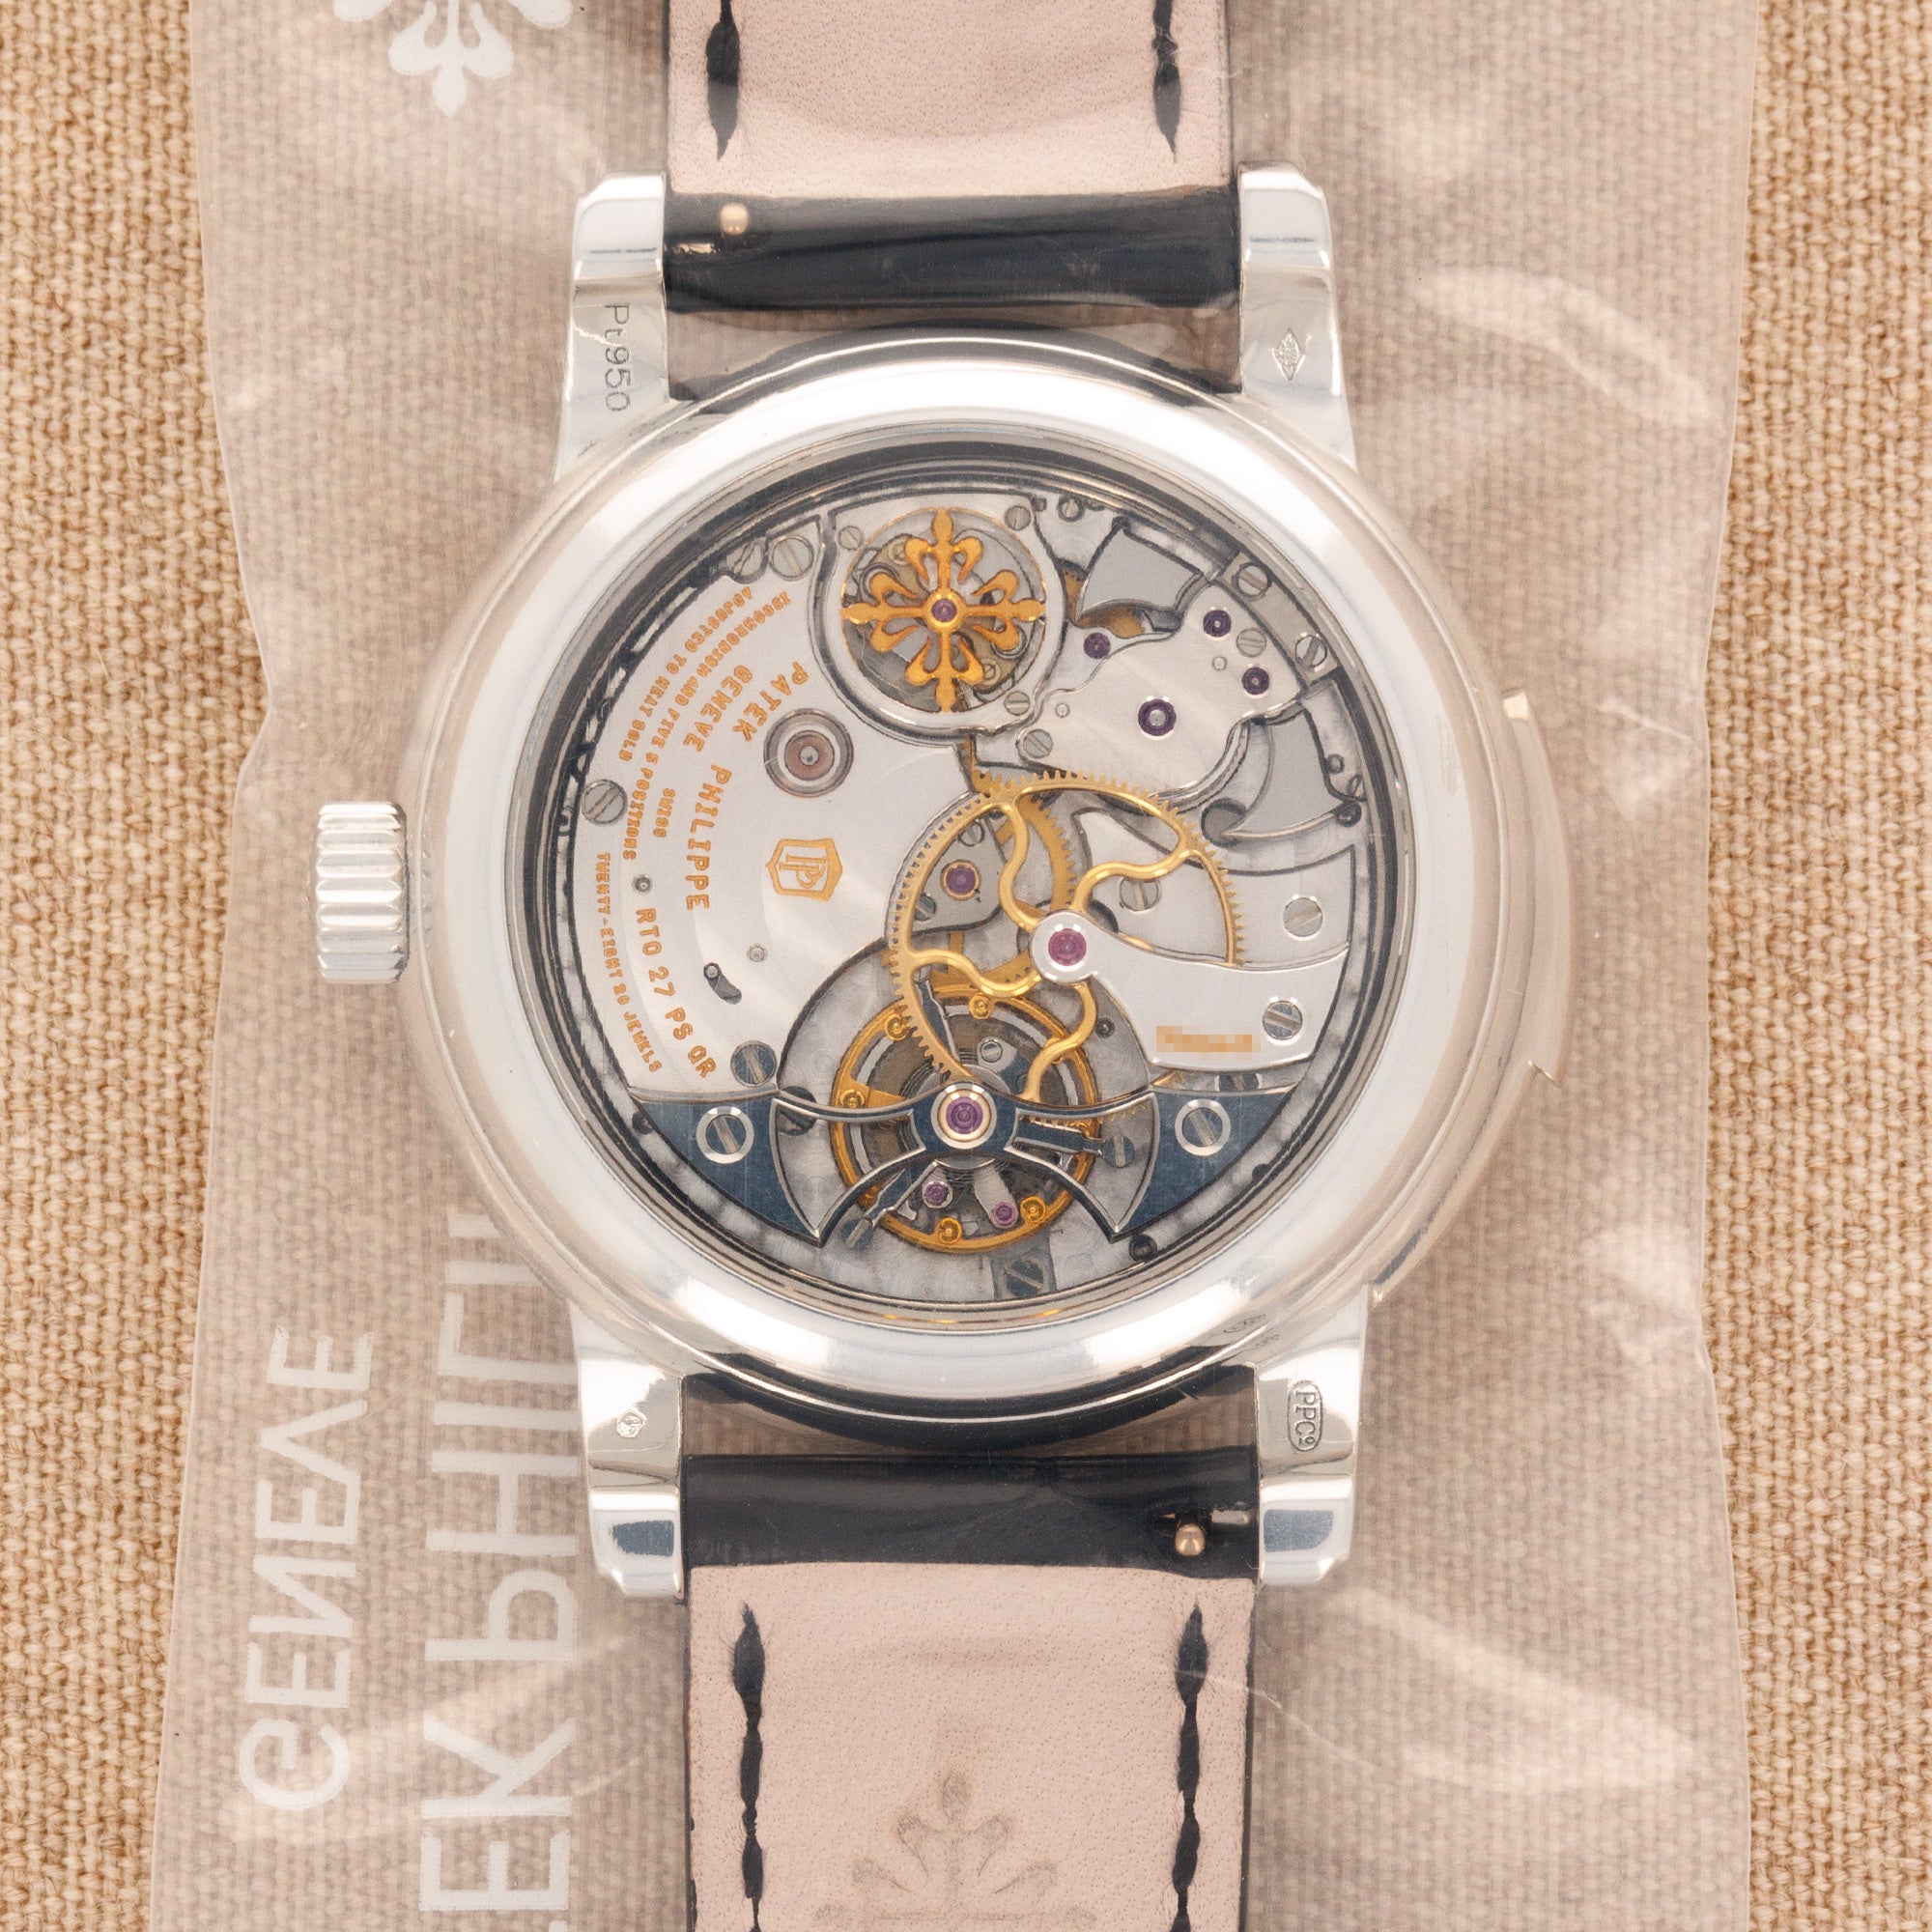 Patek Philippe - Patek Philippe Platinum Perpetual Calendar Tourbillon Watch Ref. 5016 - The Keystone Watches